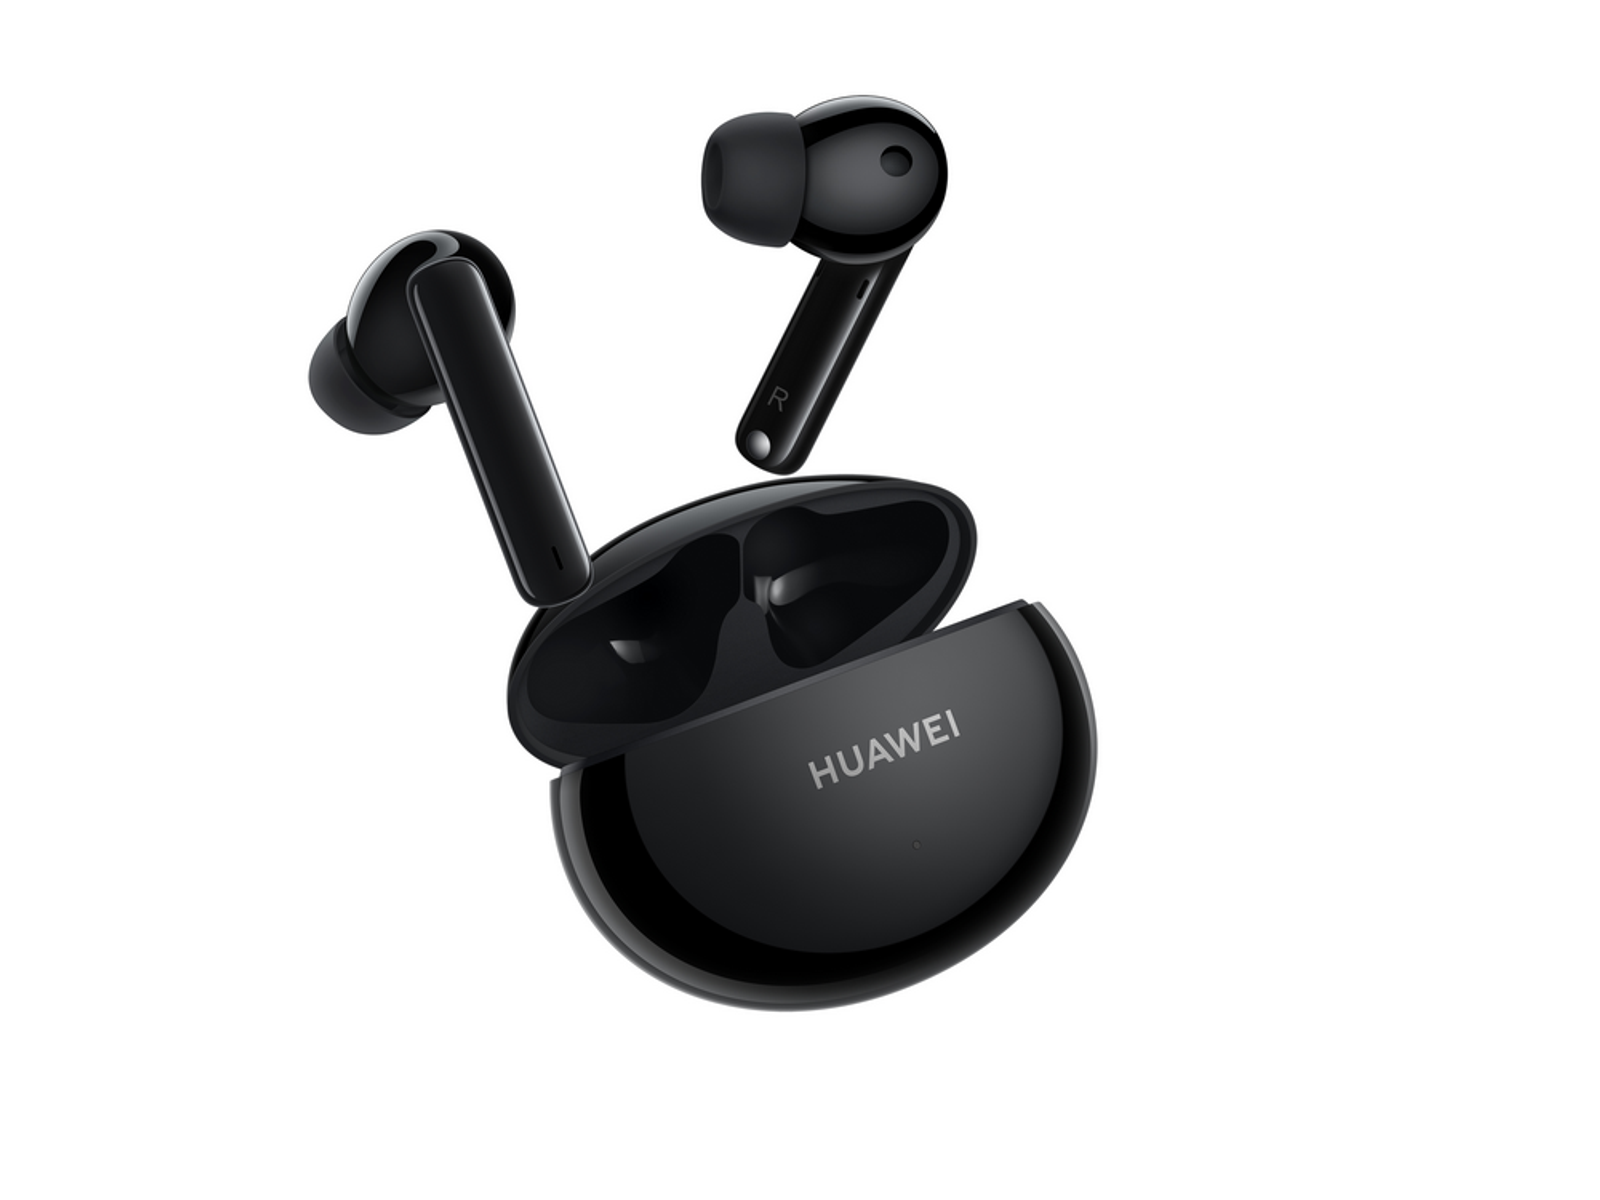 4i-schwarz, schwarz In-ear Bluetooth FreeBuds Kopfhörer HUAWEI